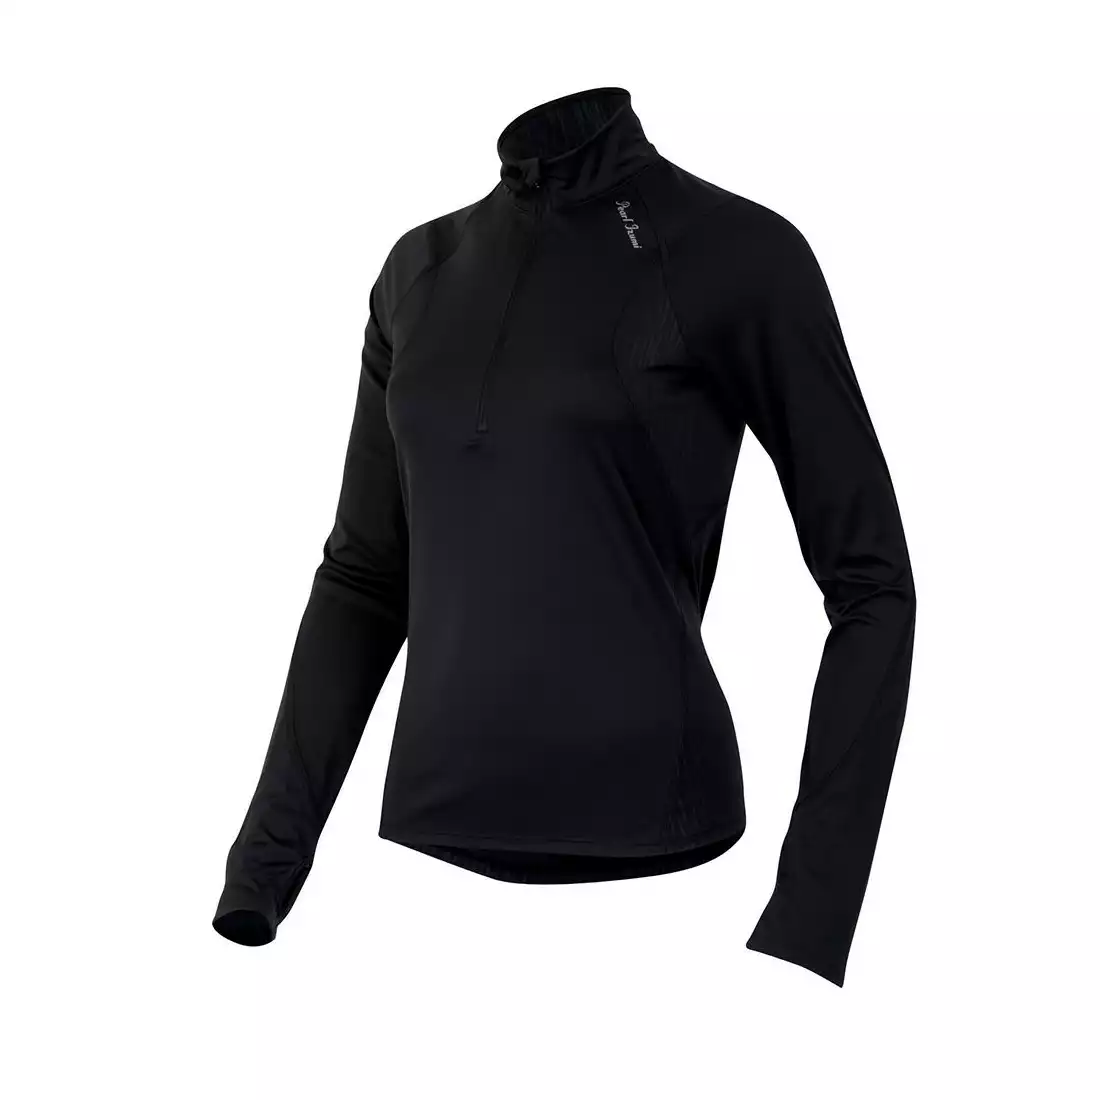 PEARL IZUMI - 12221403-021 FLY LS - damska koszulka do biegania d/r, kolor: Czarny